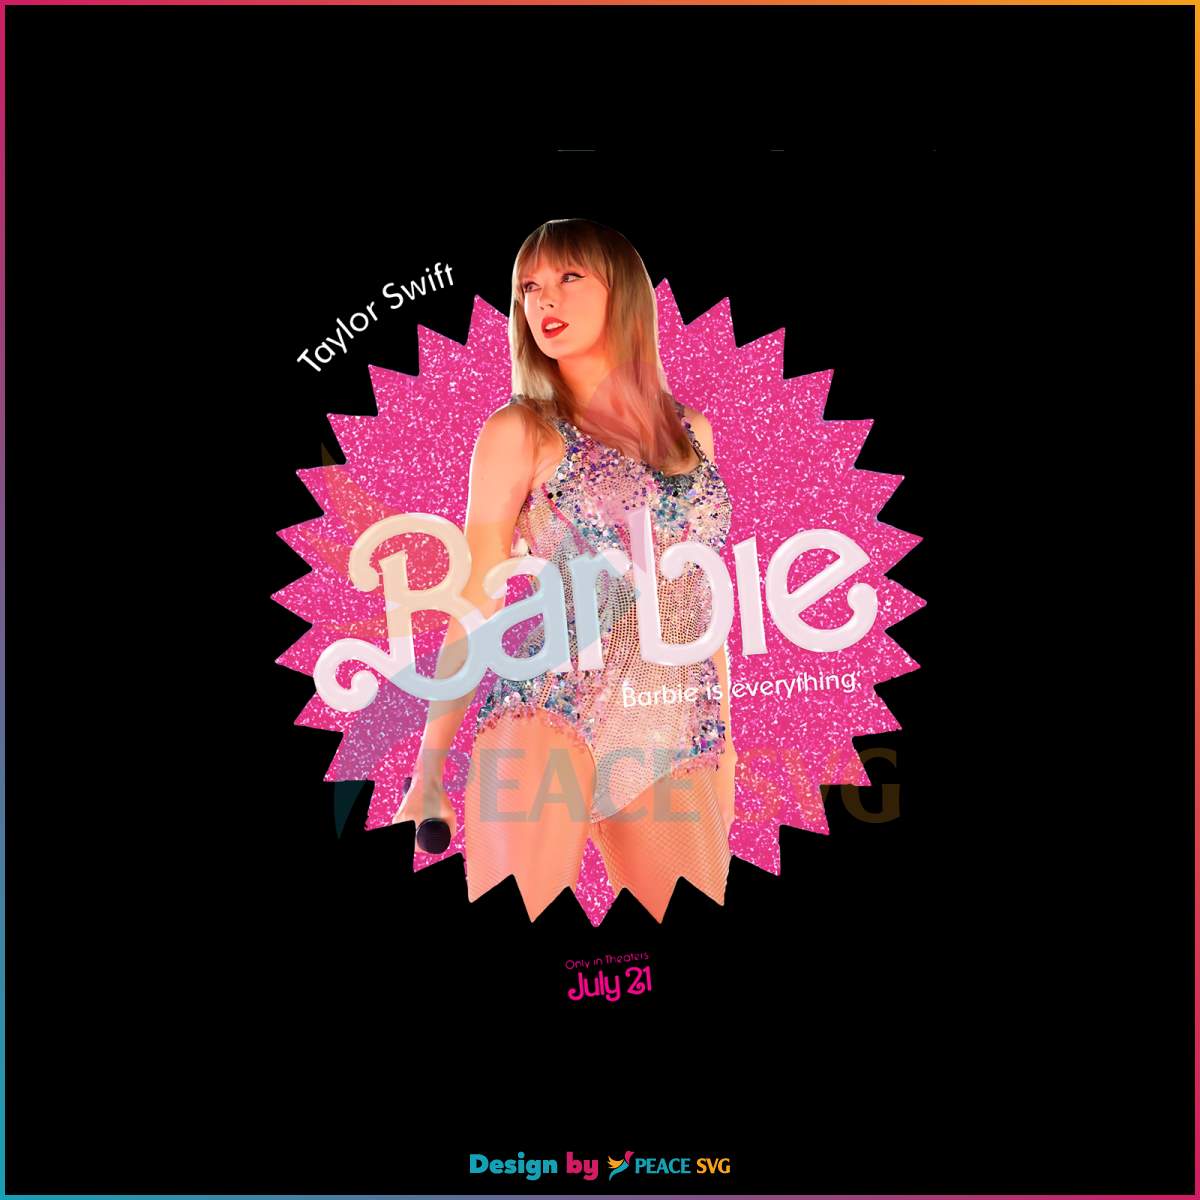 taylor-barbie-edition-png-pink-barbie-eras-tour-png-download